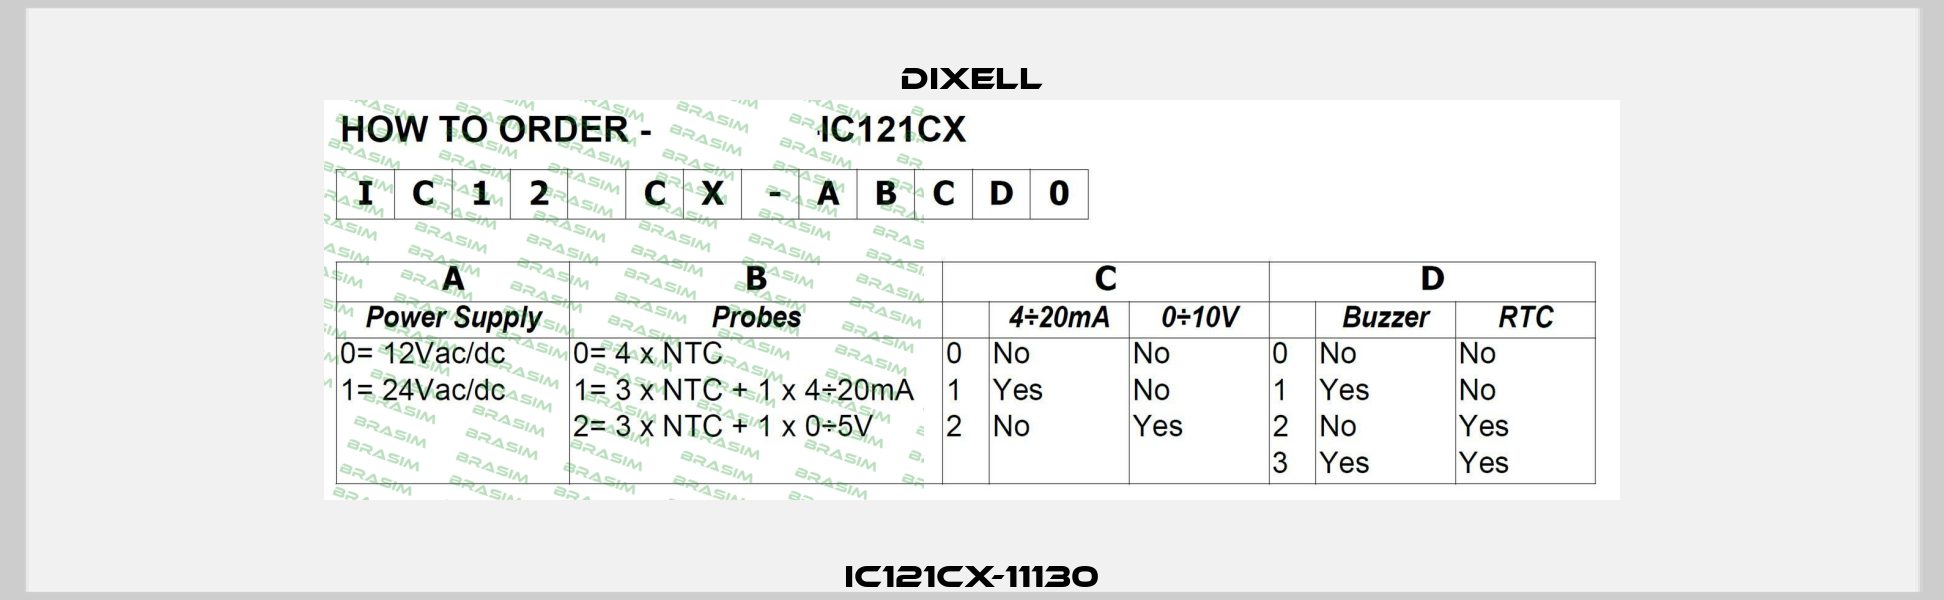 IC121CX-11130 Dixell